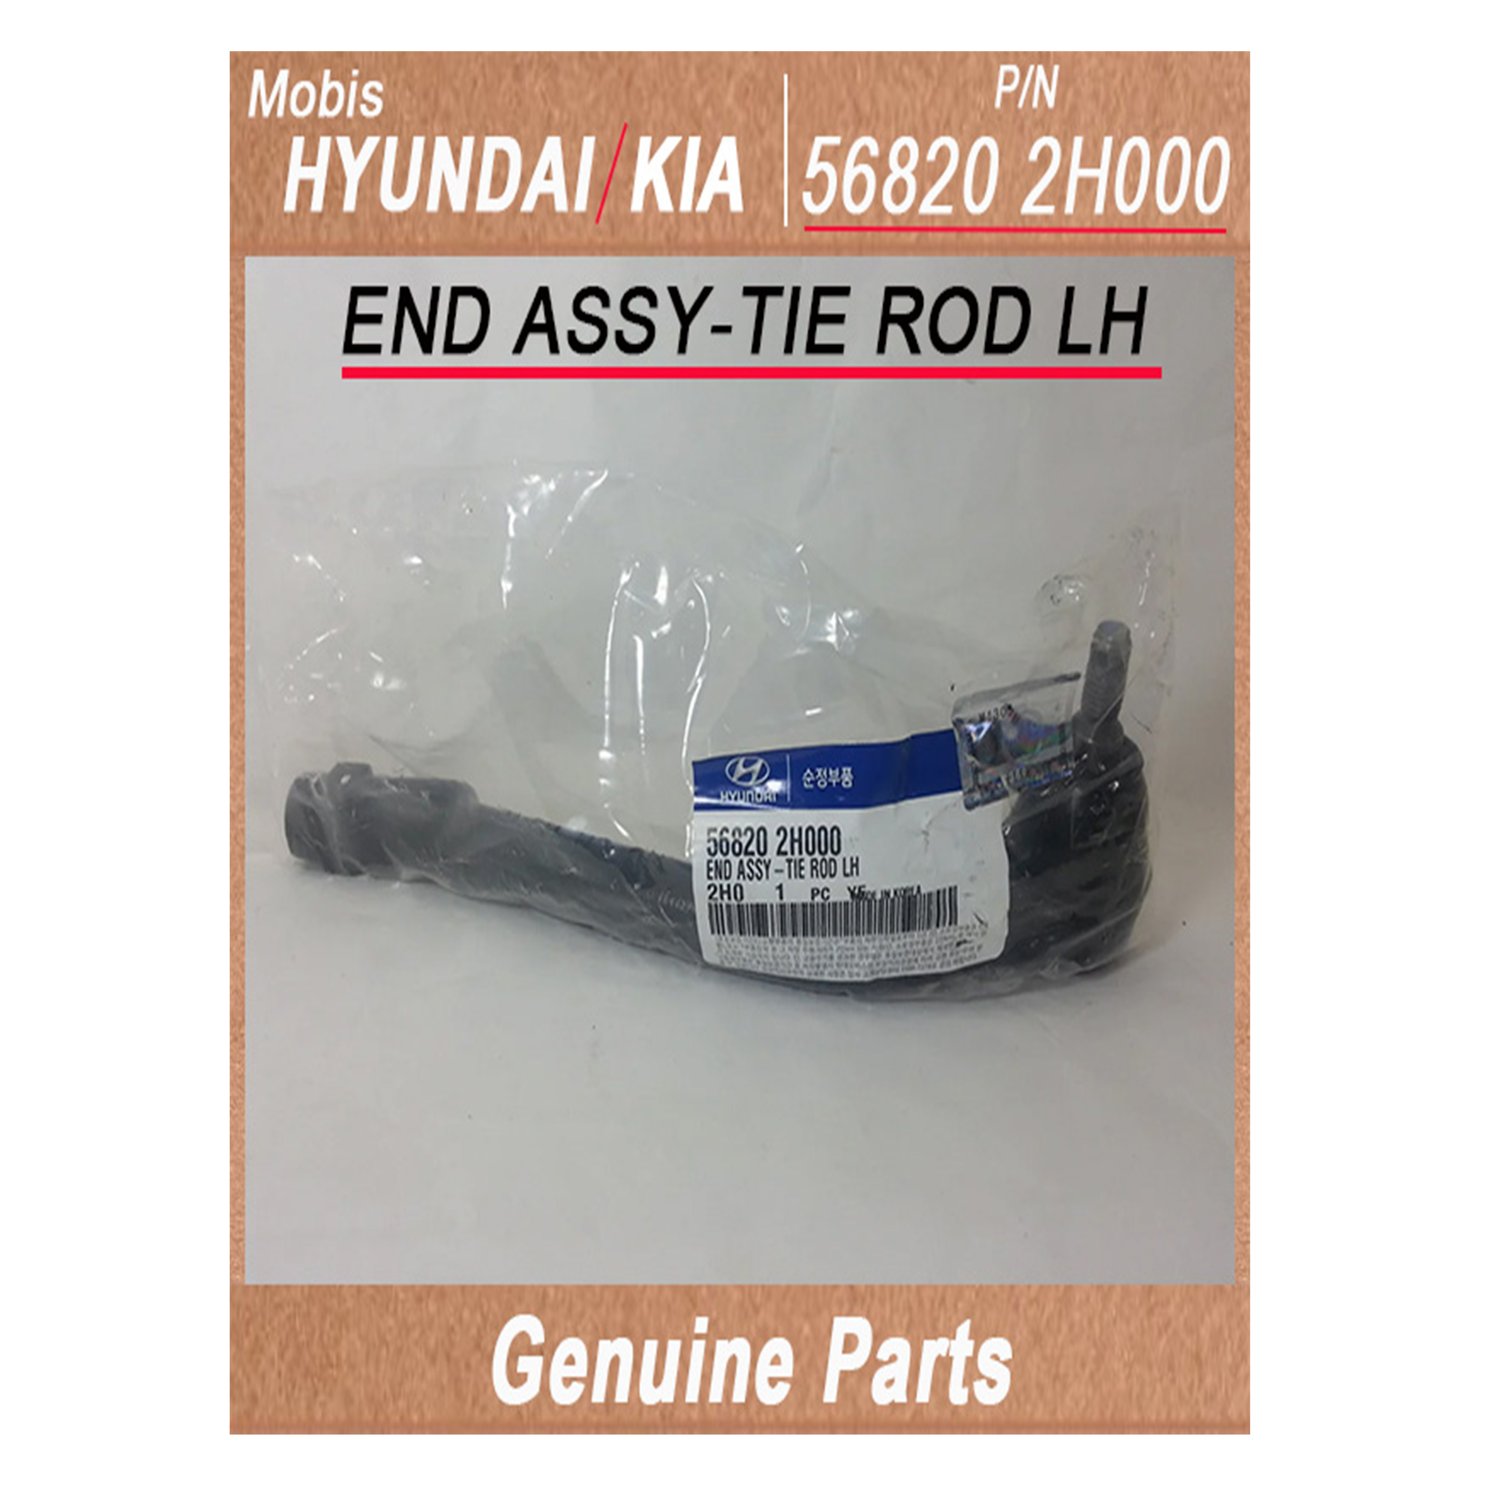 568202H000 _ END ASSY_TIE ROD LH _ Genuine Korean Automotive Spare Parts _ Hyundai Kia _Mobis_